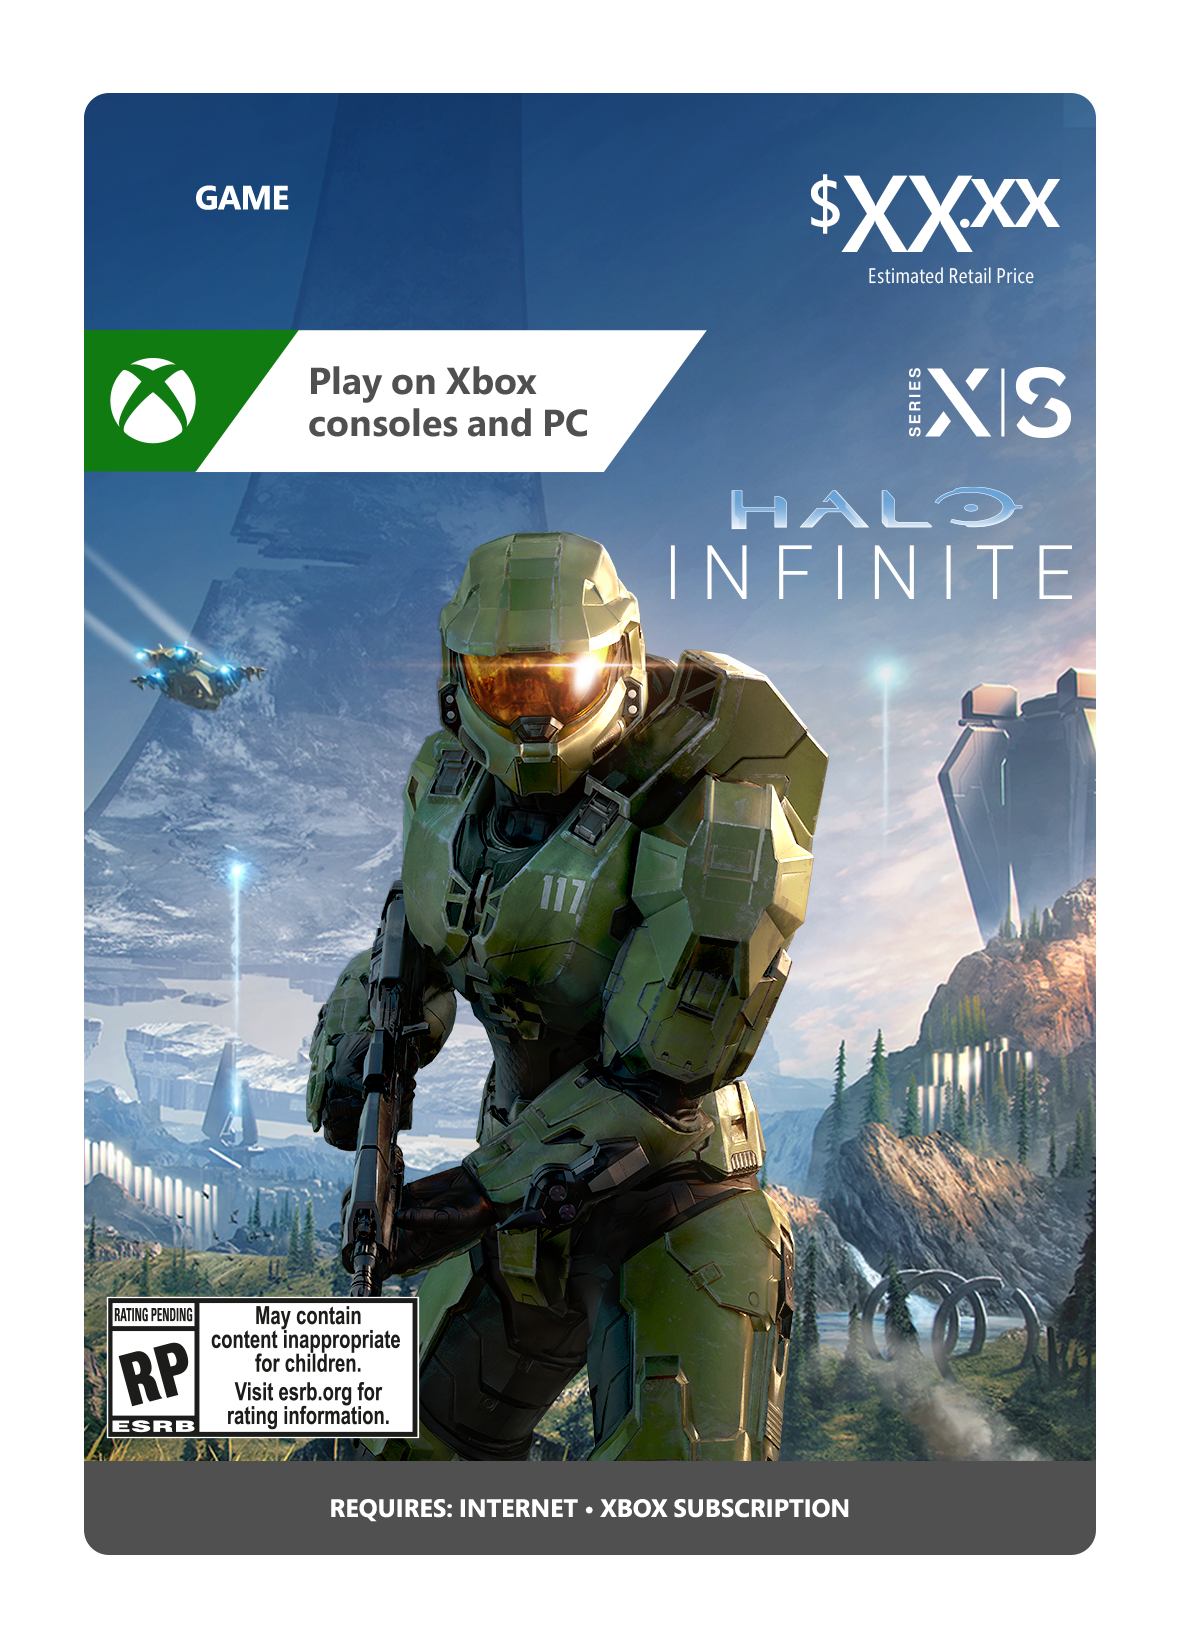 Microsoft Flight Simulator Xbox Series XS / Windows 10 [Digital Code] 